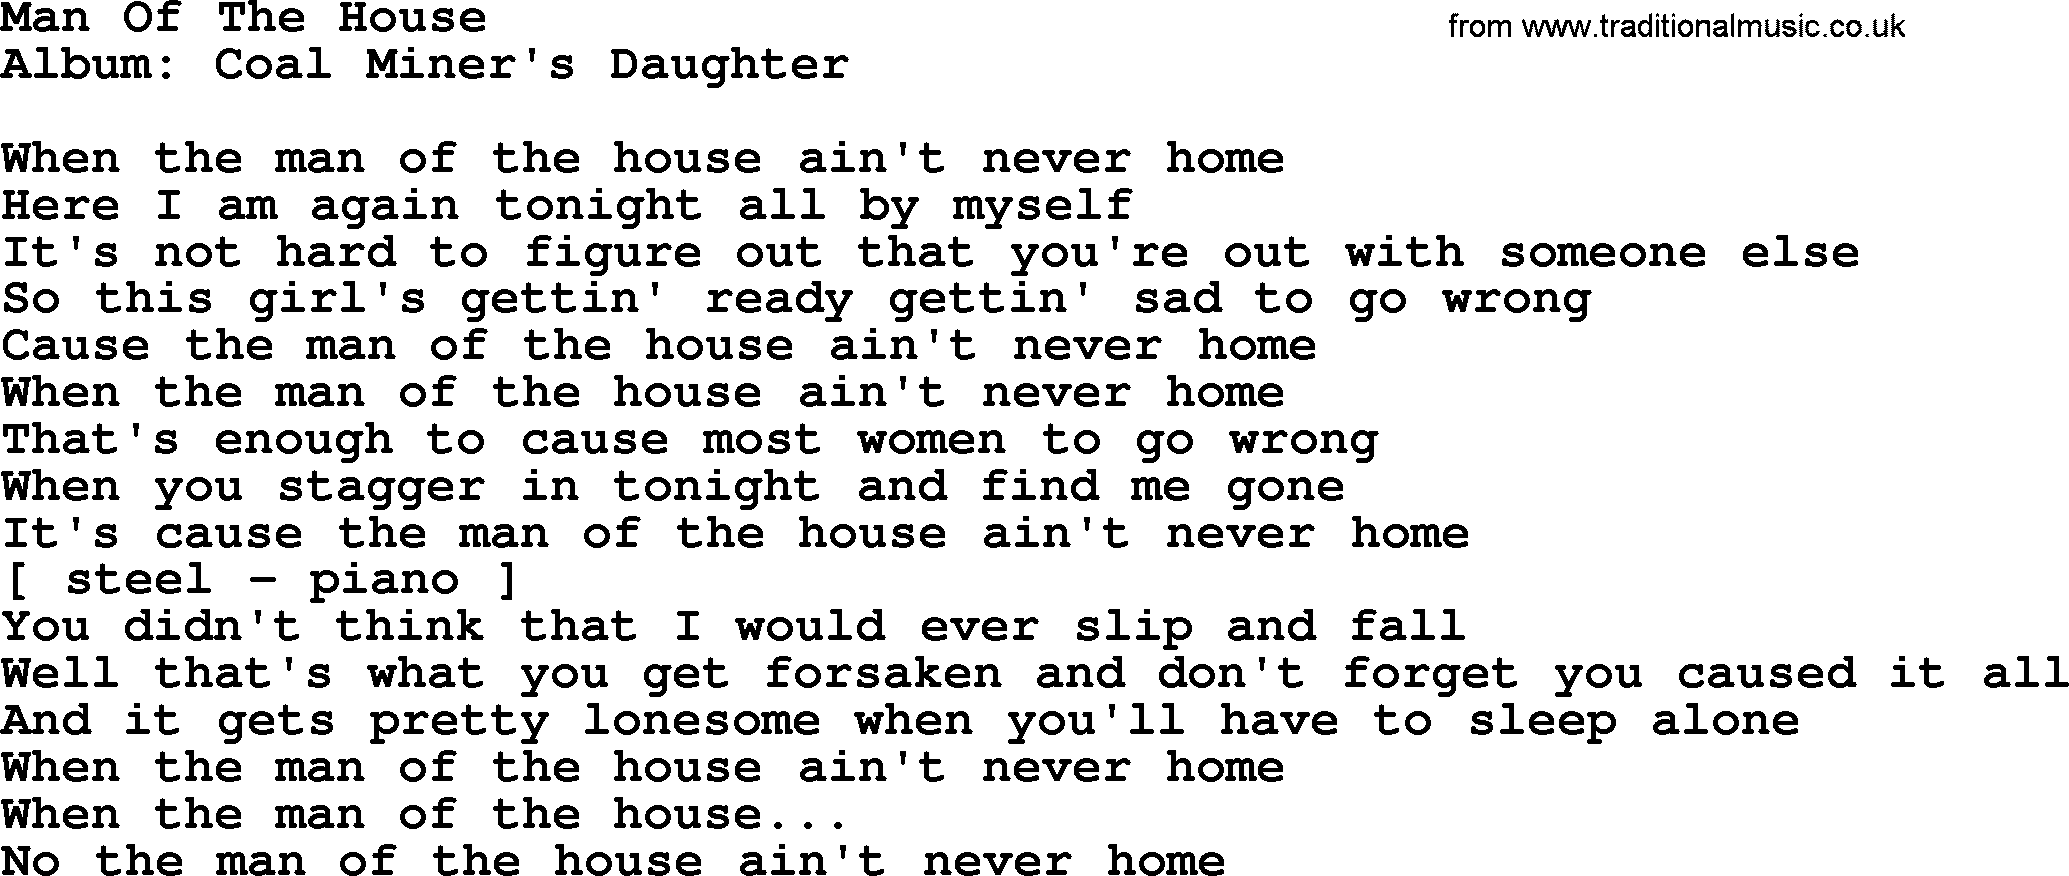 Loretta Lynn song: Man Of The House lyrics